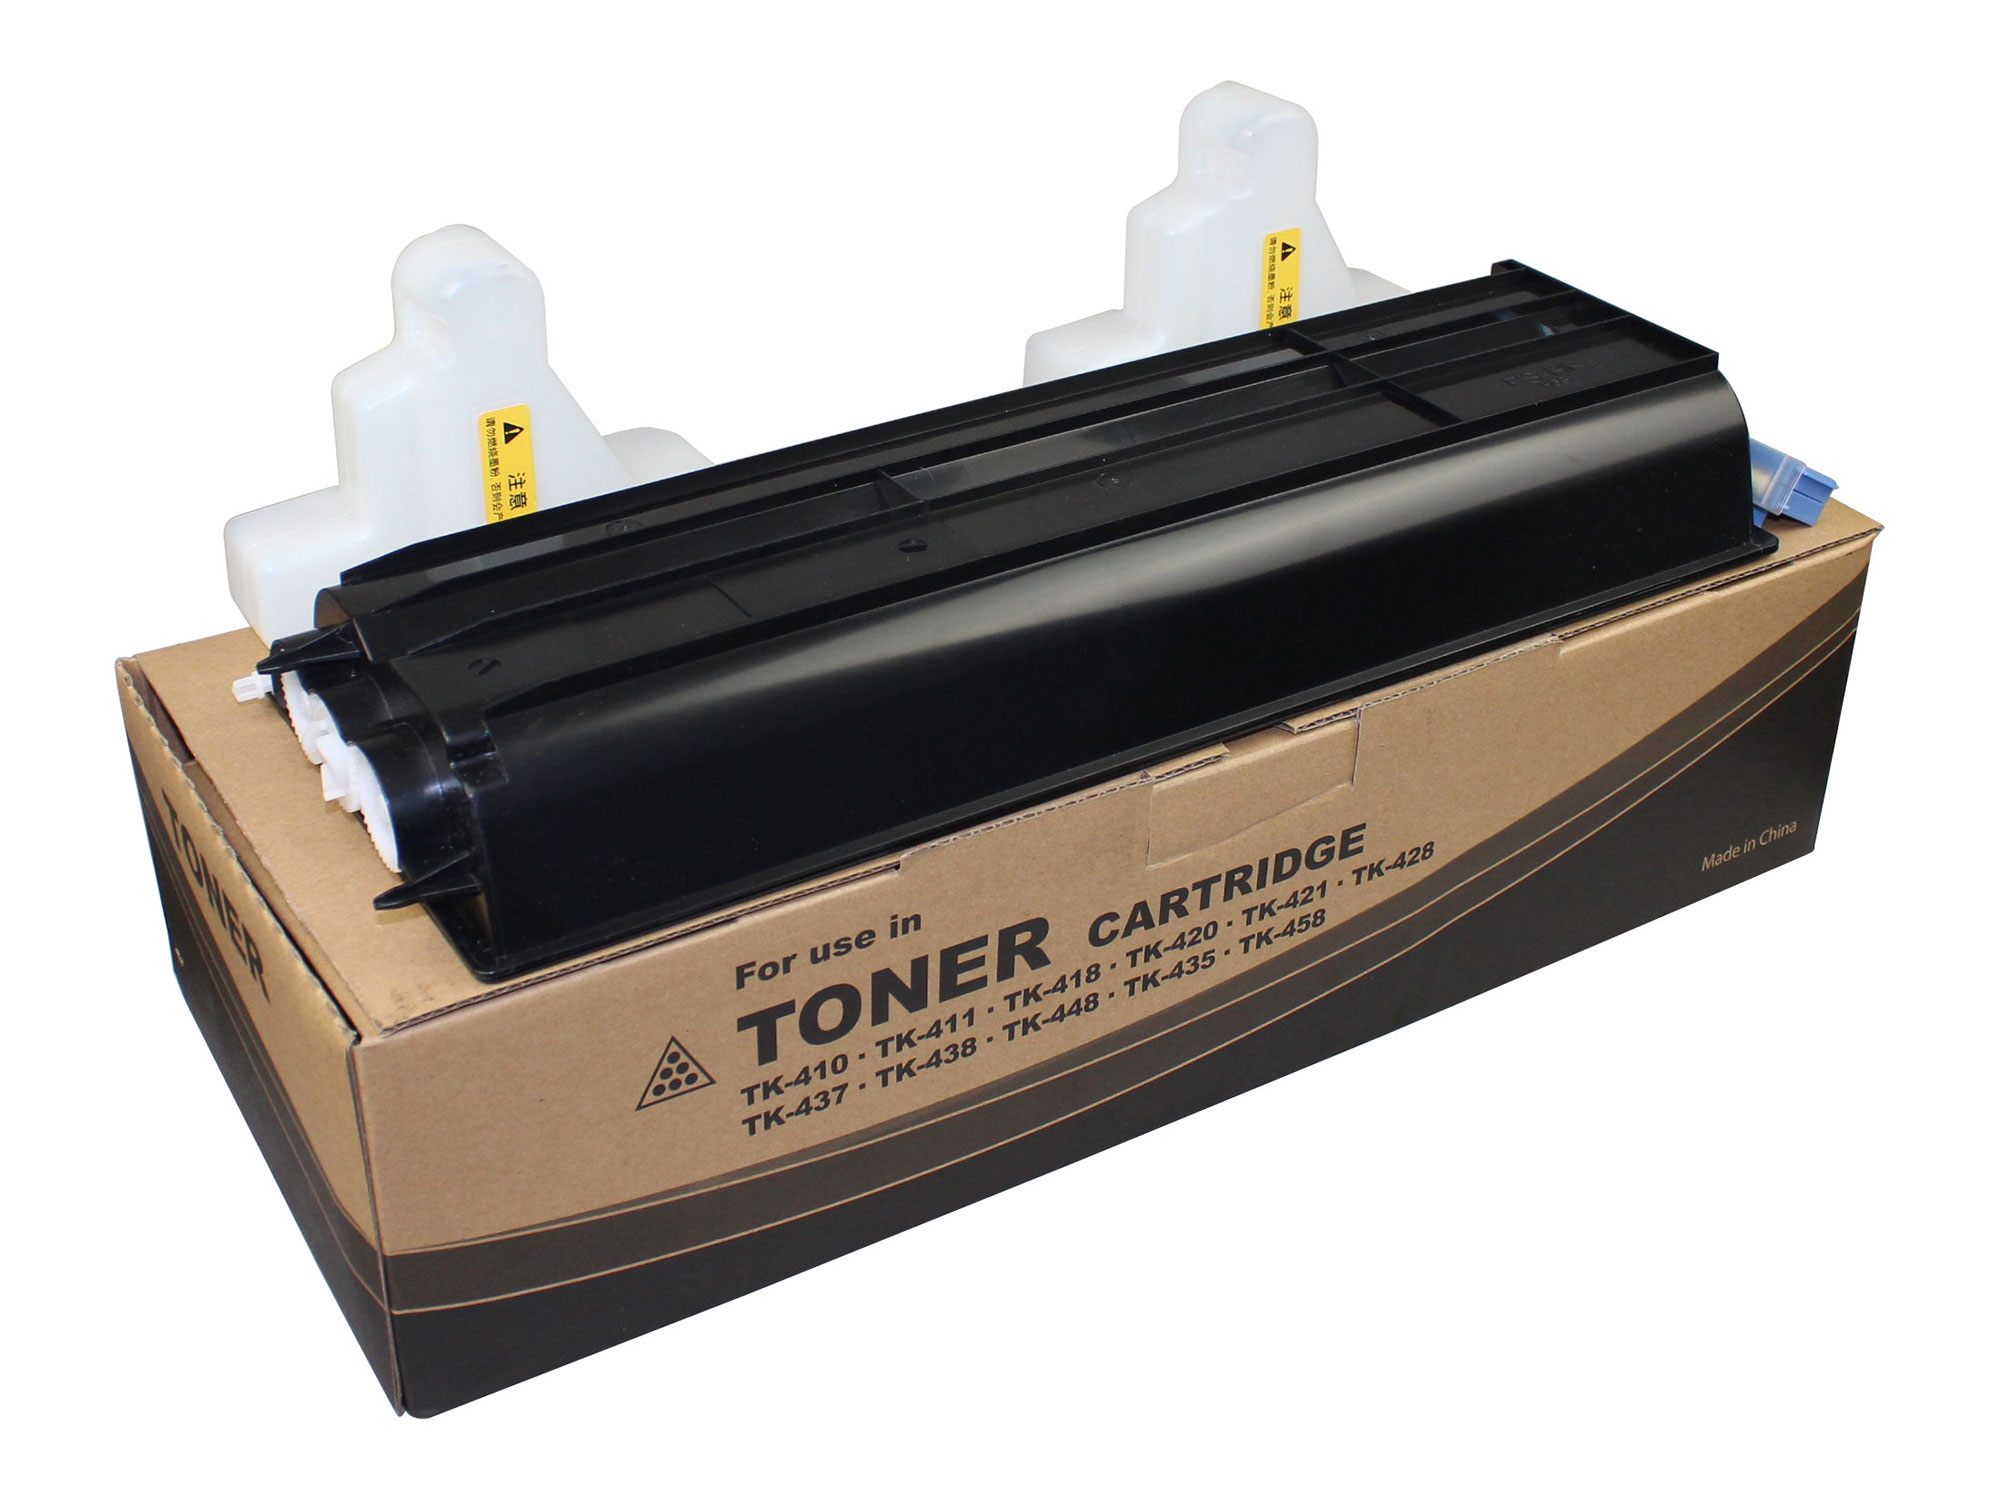 TK-410/411/418 TK-420/421/428/438 TK-435/437/448/458 Toner Cartridge W/O Chip for Kyocera KM-1620